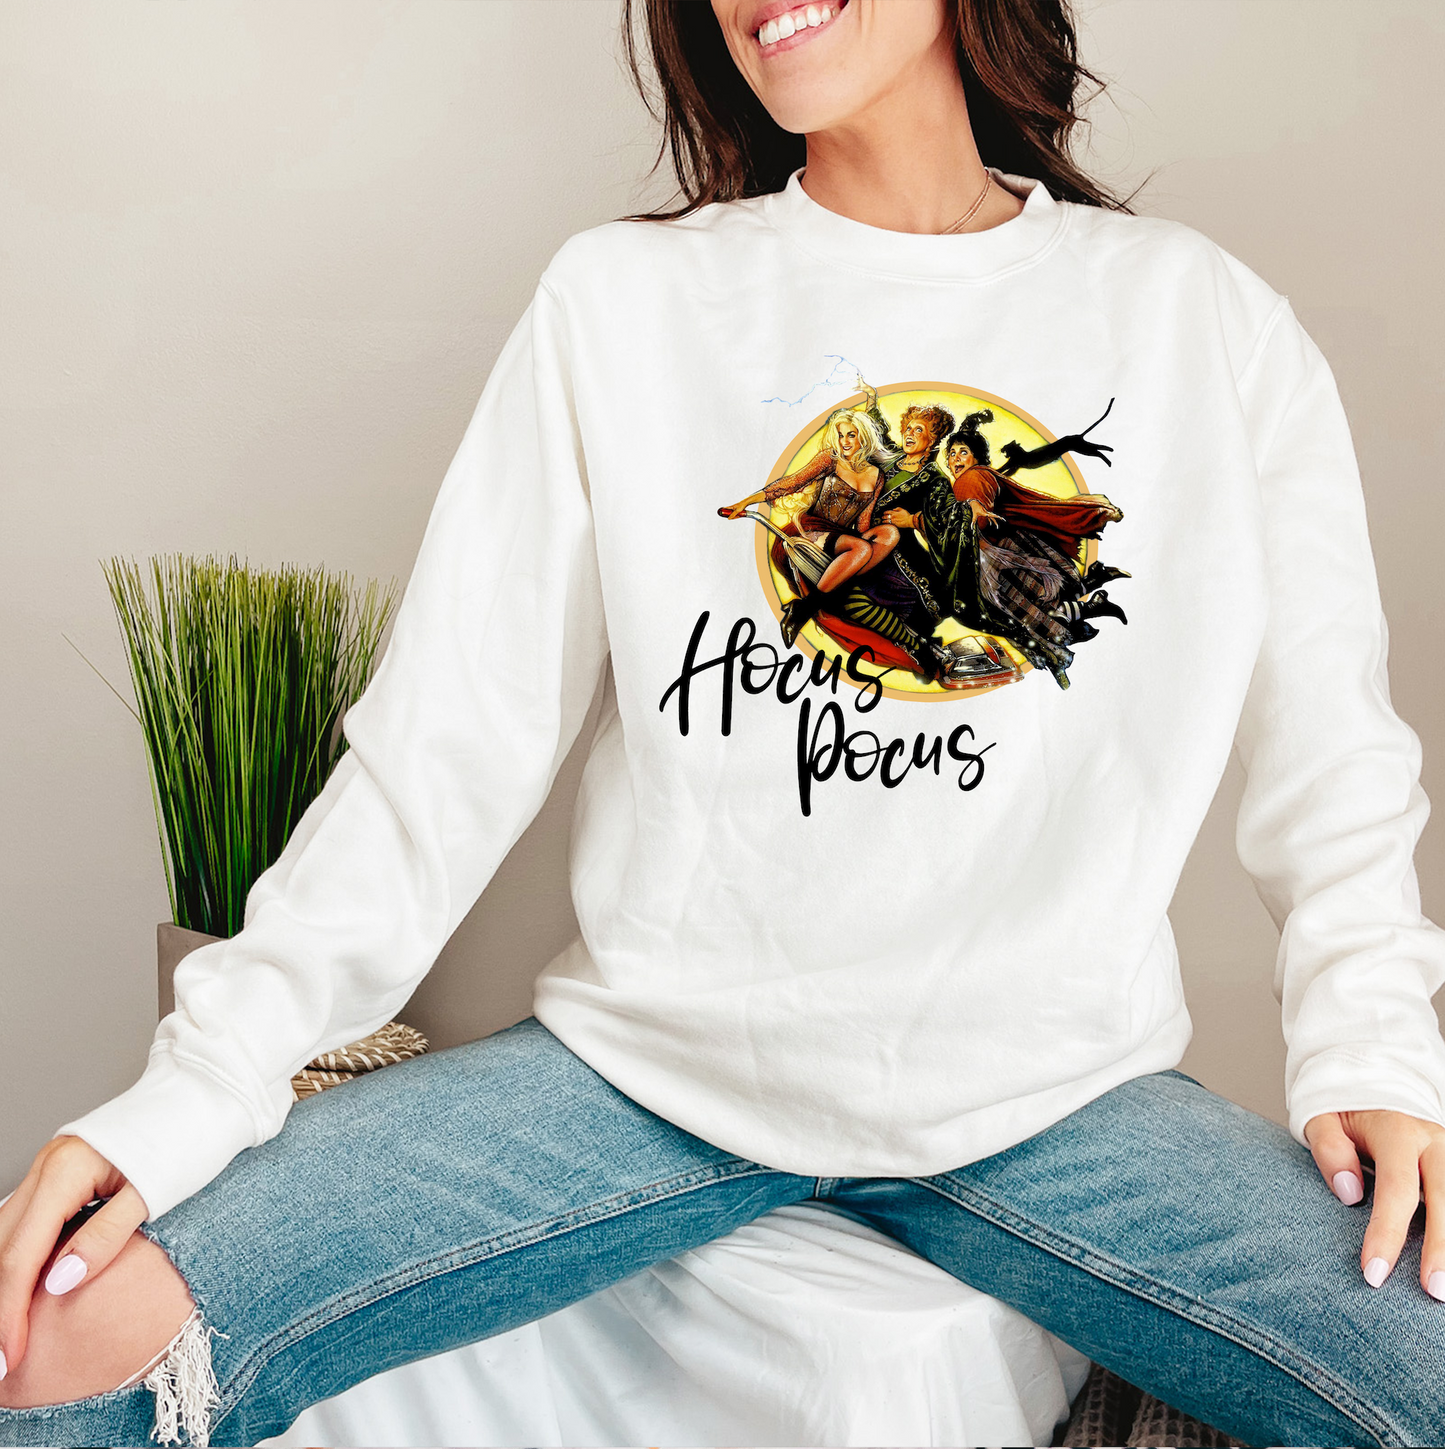 Hocus Pocus Gildan Soft Style Sweatshirt